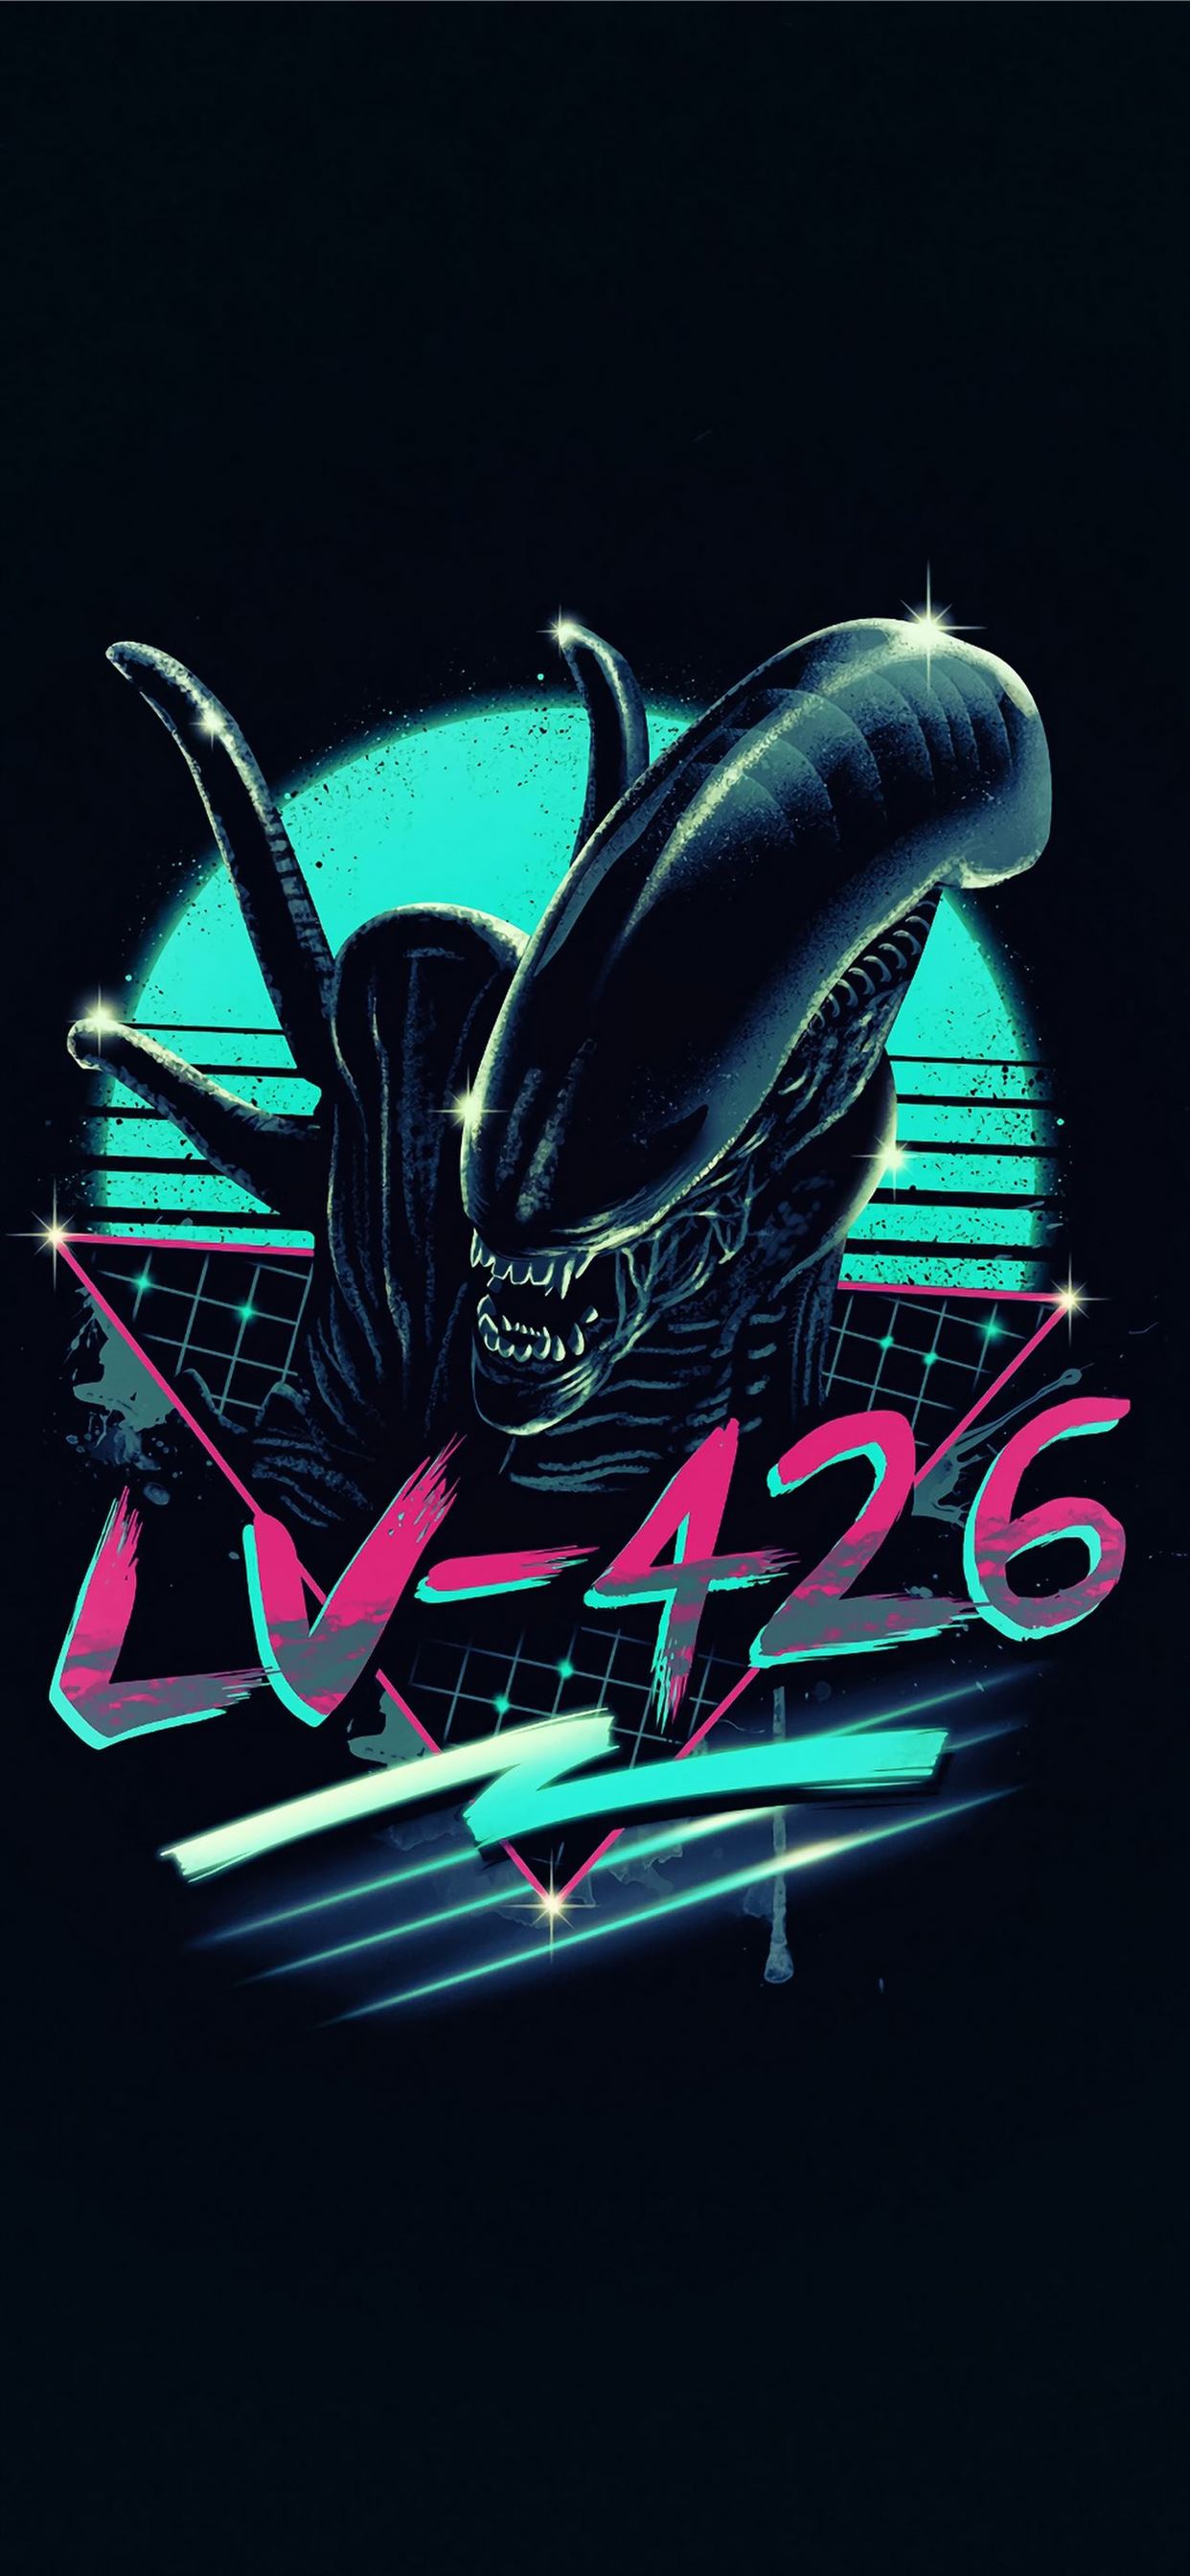 Minimalist Alien Xenomorph Sci fi 4k Dell S2716dg ... iPhone Wallpapers  Free Download